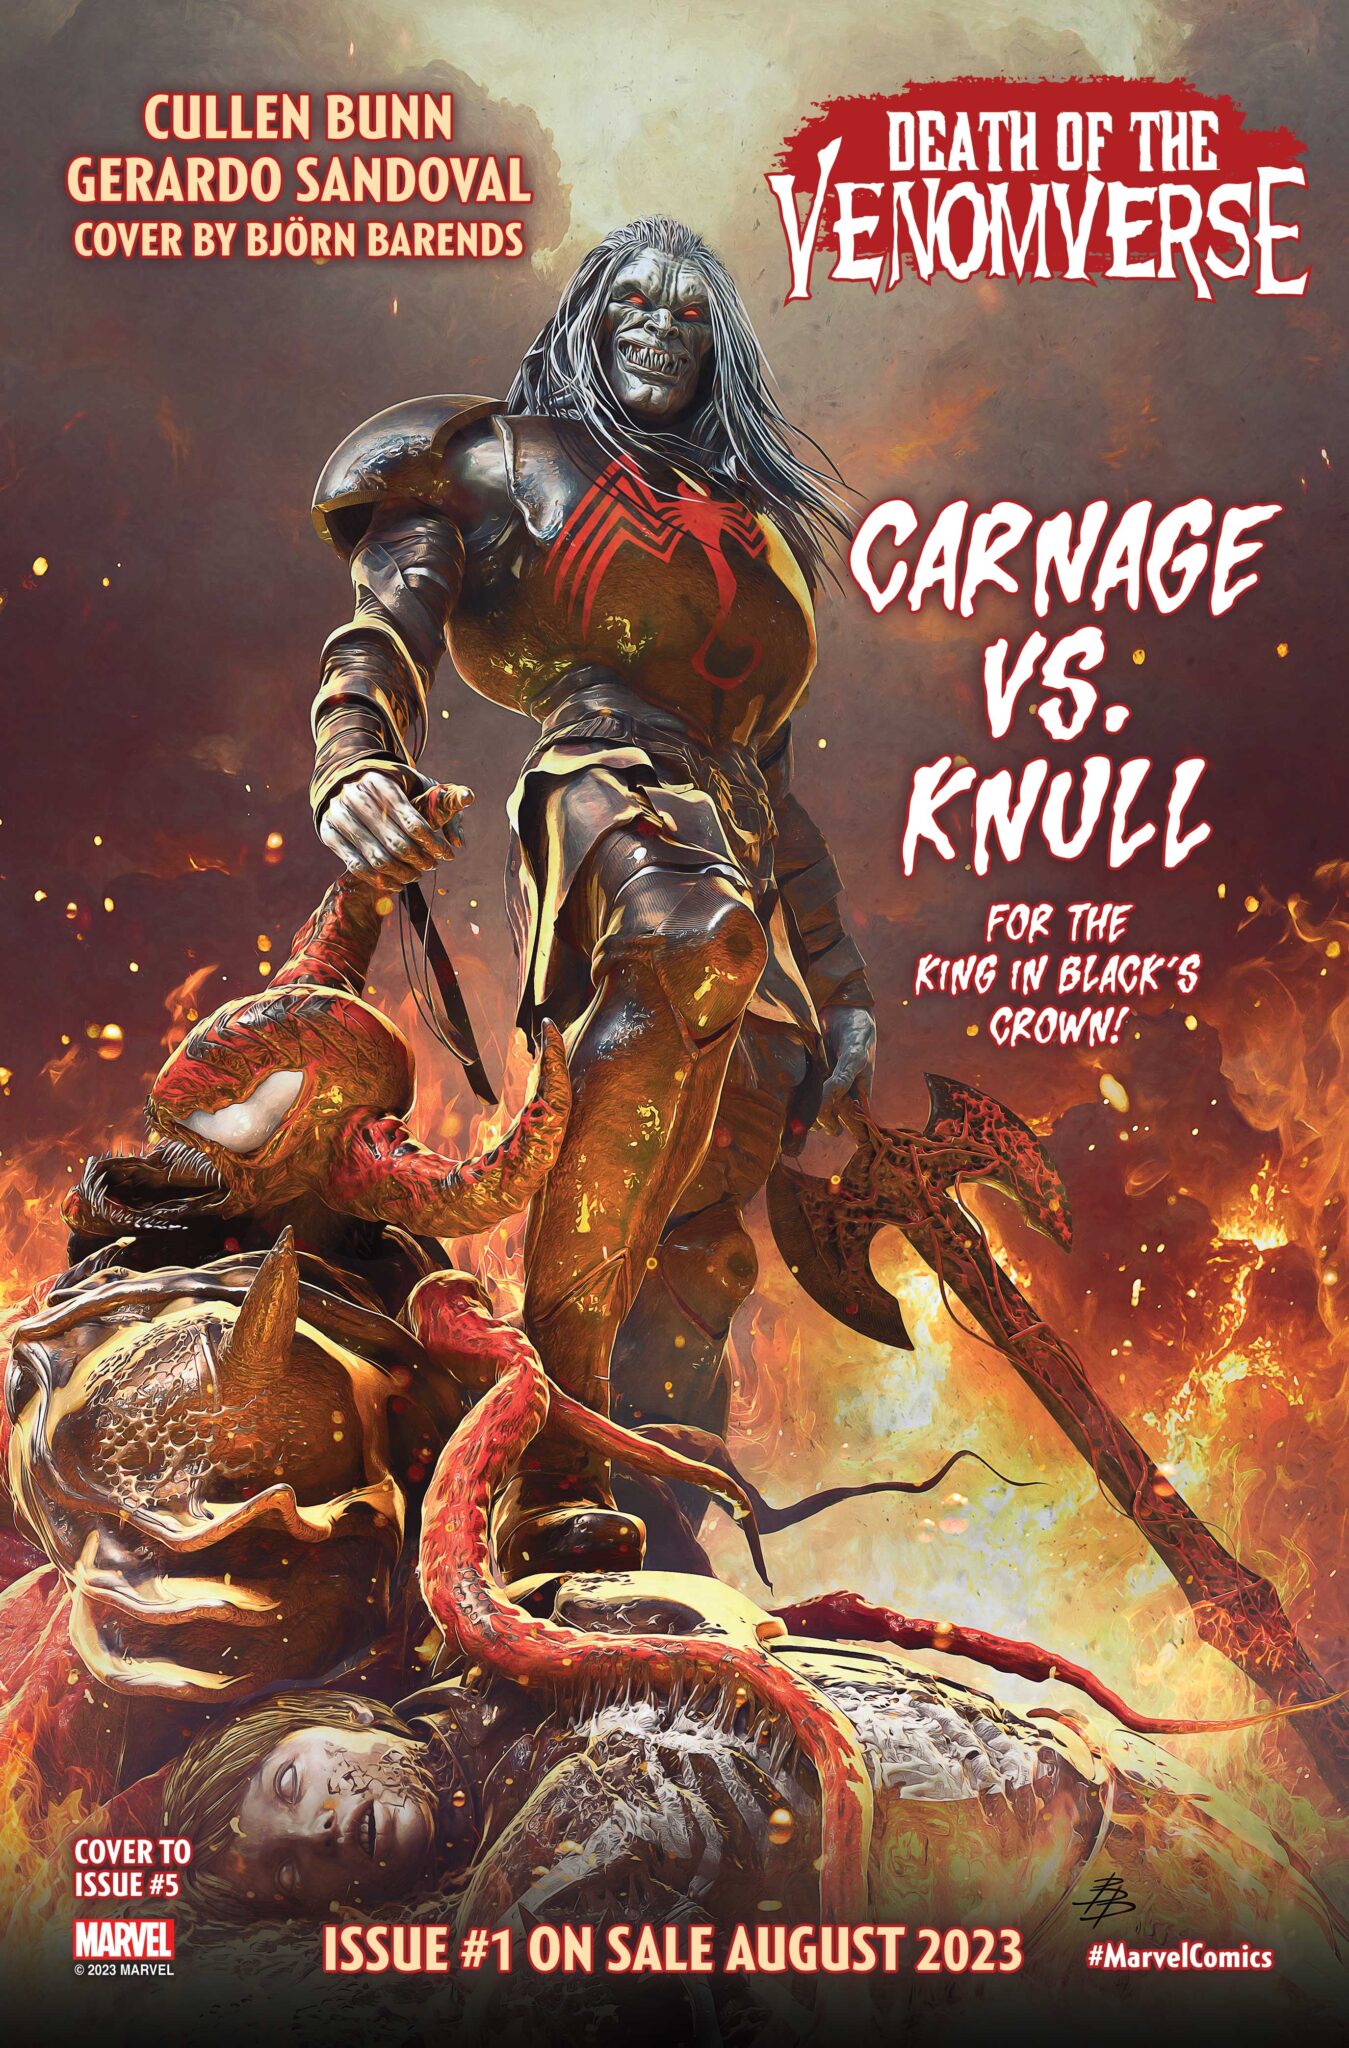  'Death Of Venomverse' promo image